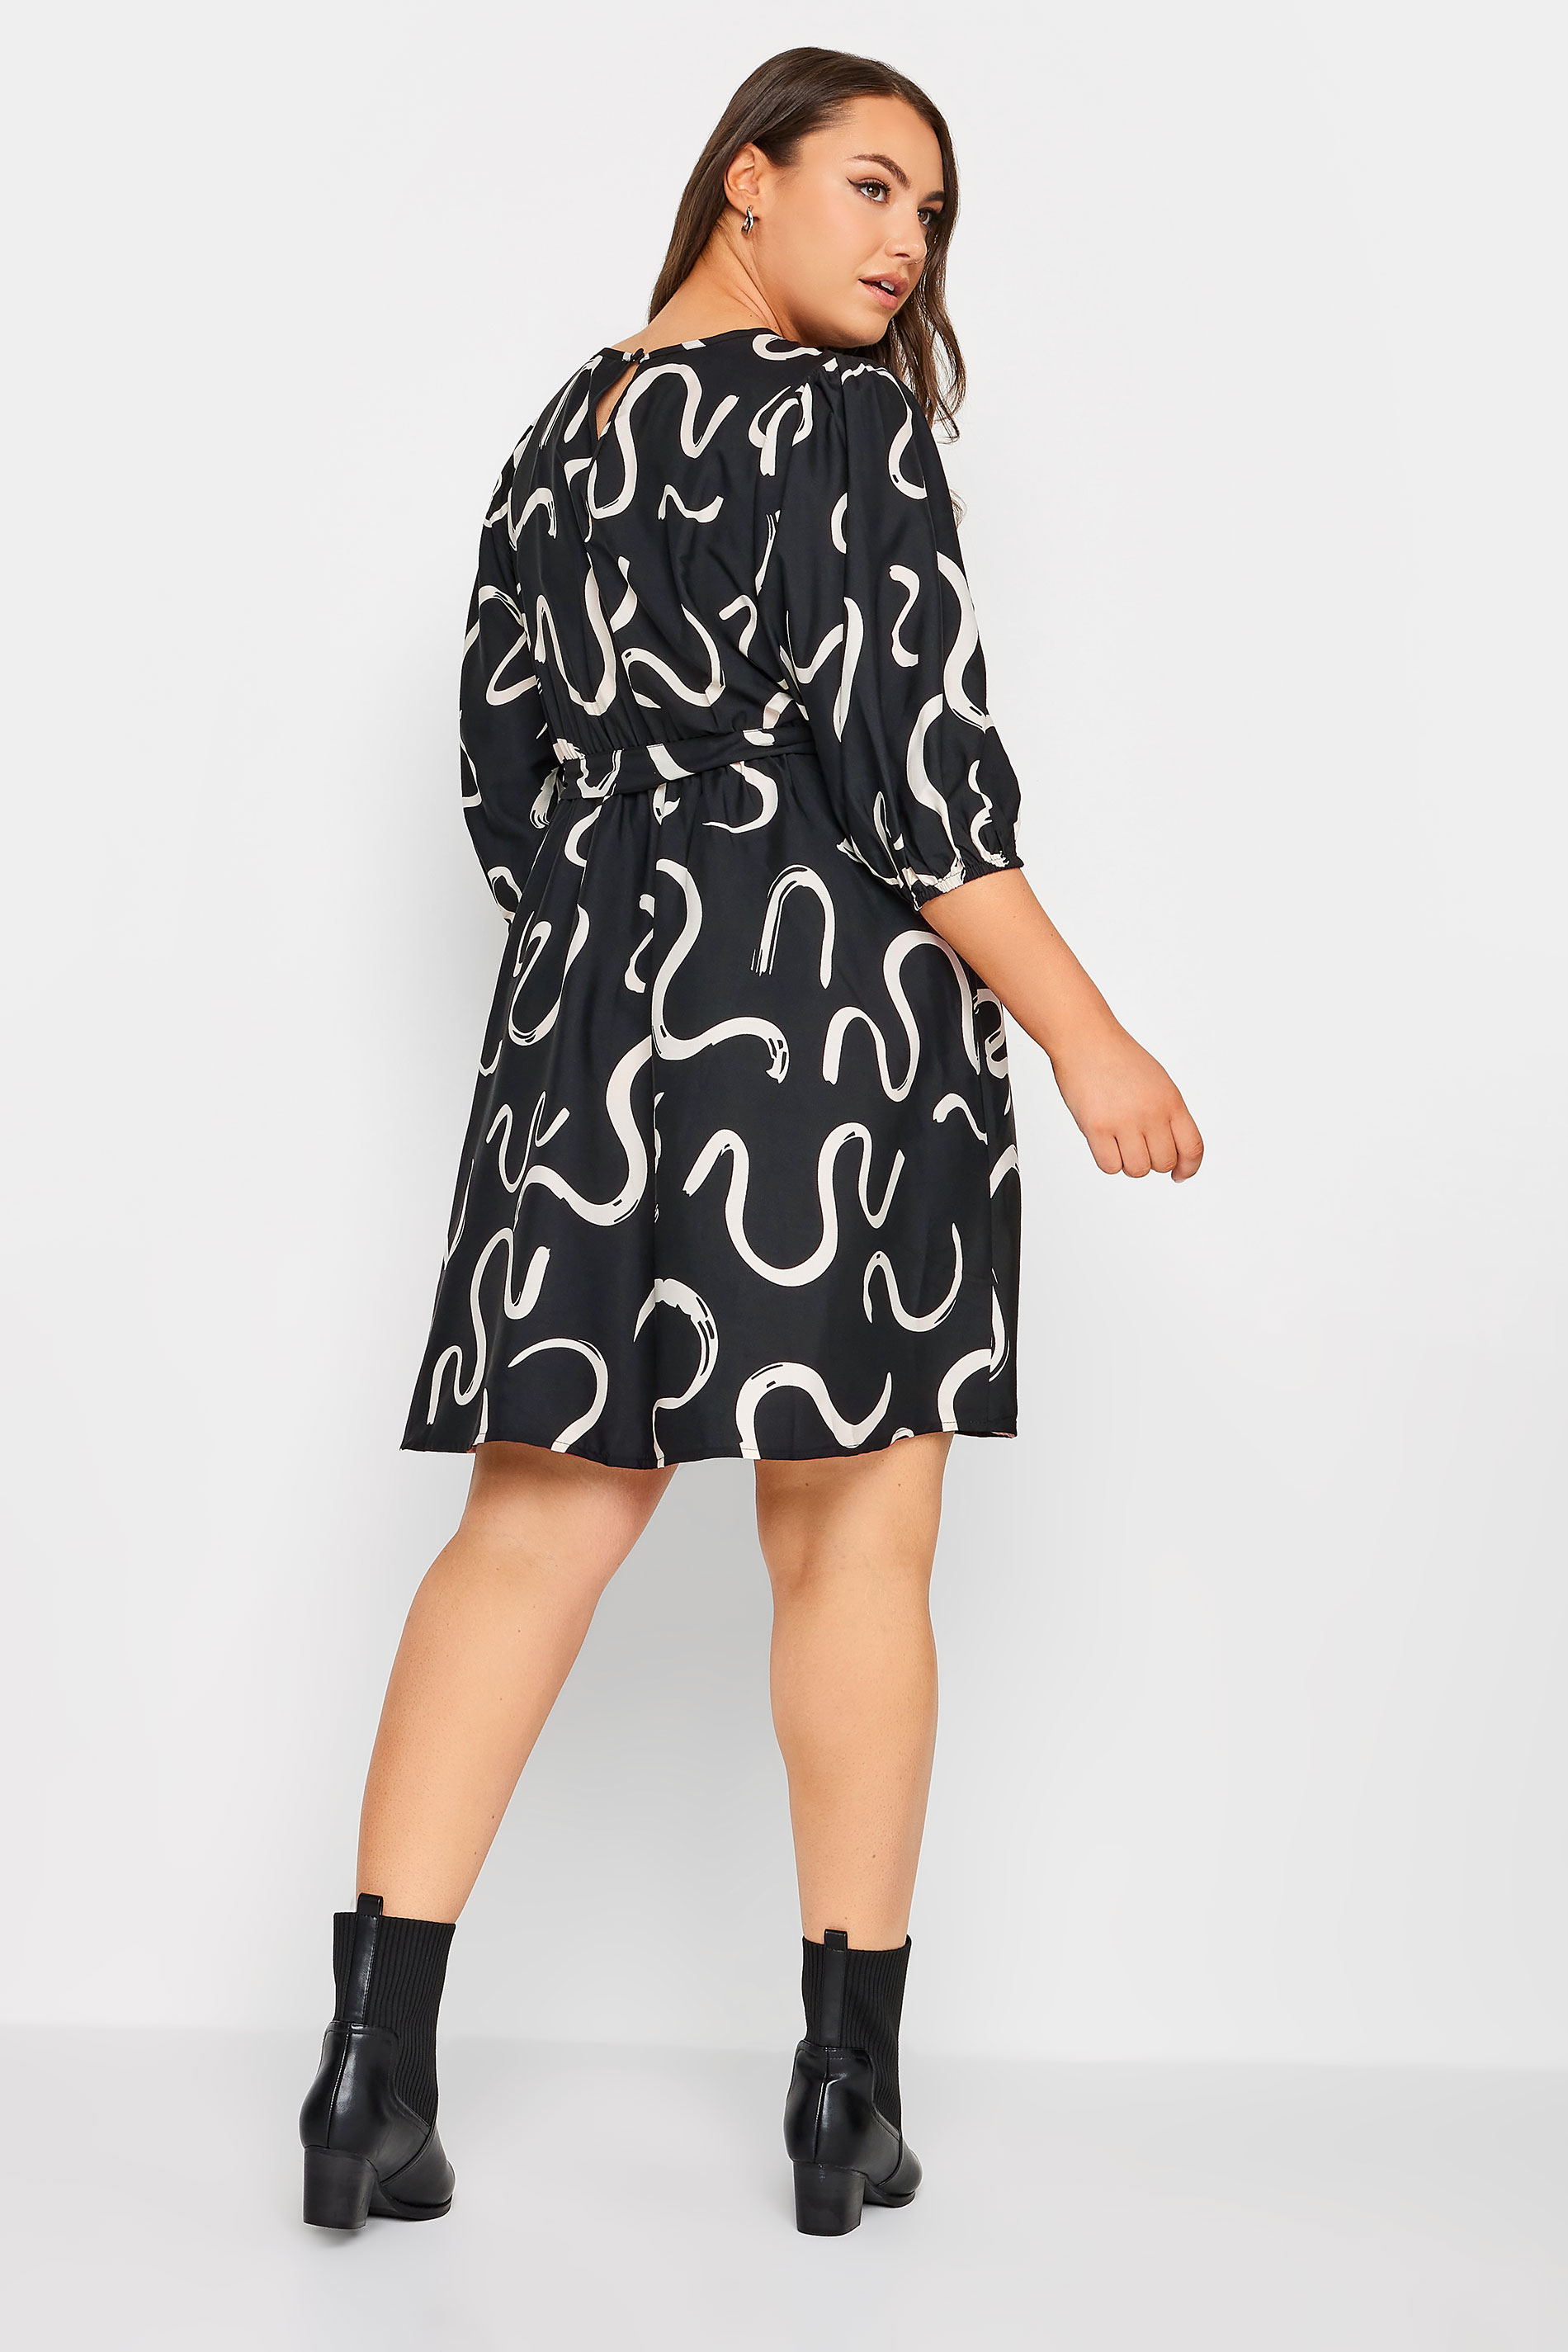 YOURS Plus Size Black Swirl Print Mini Dress | Yours Clothing 3